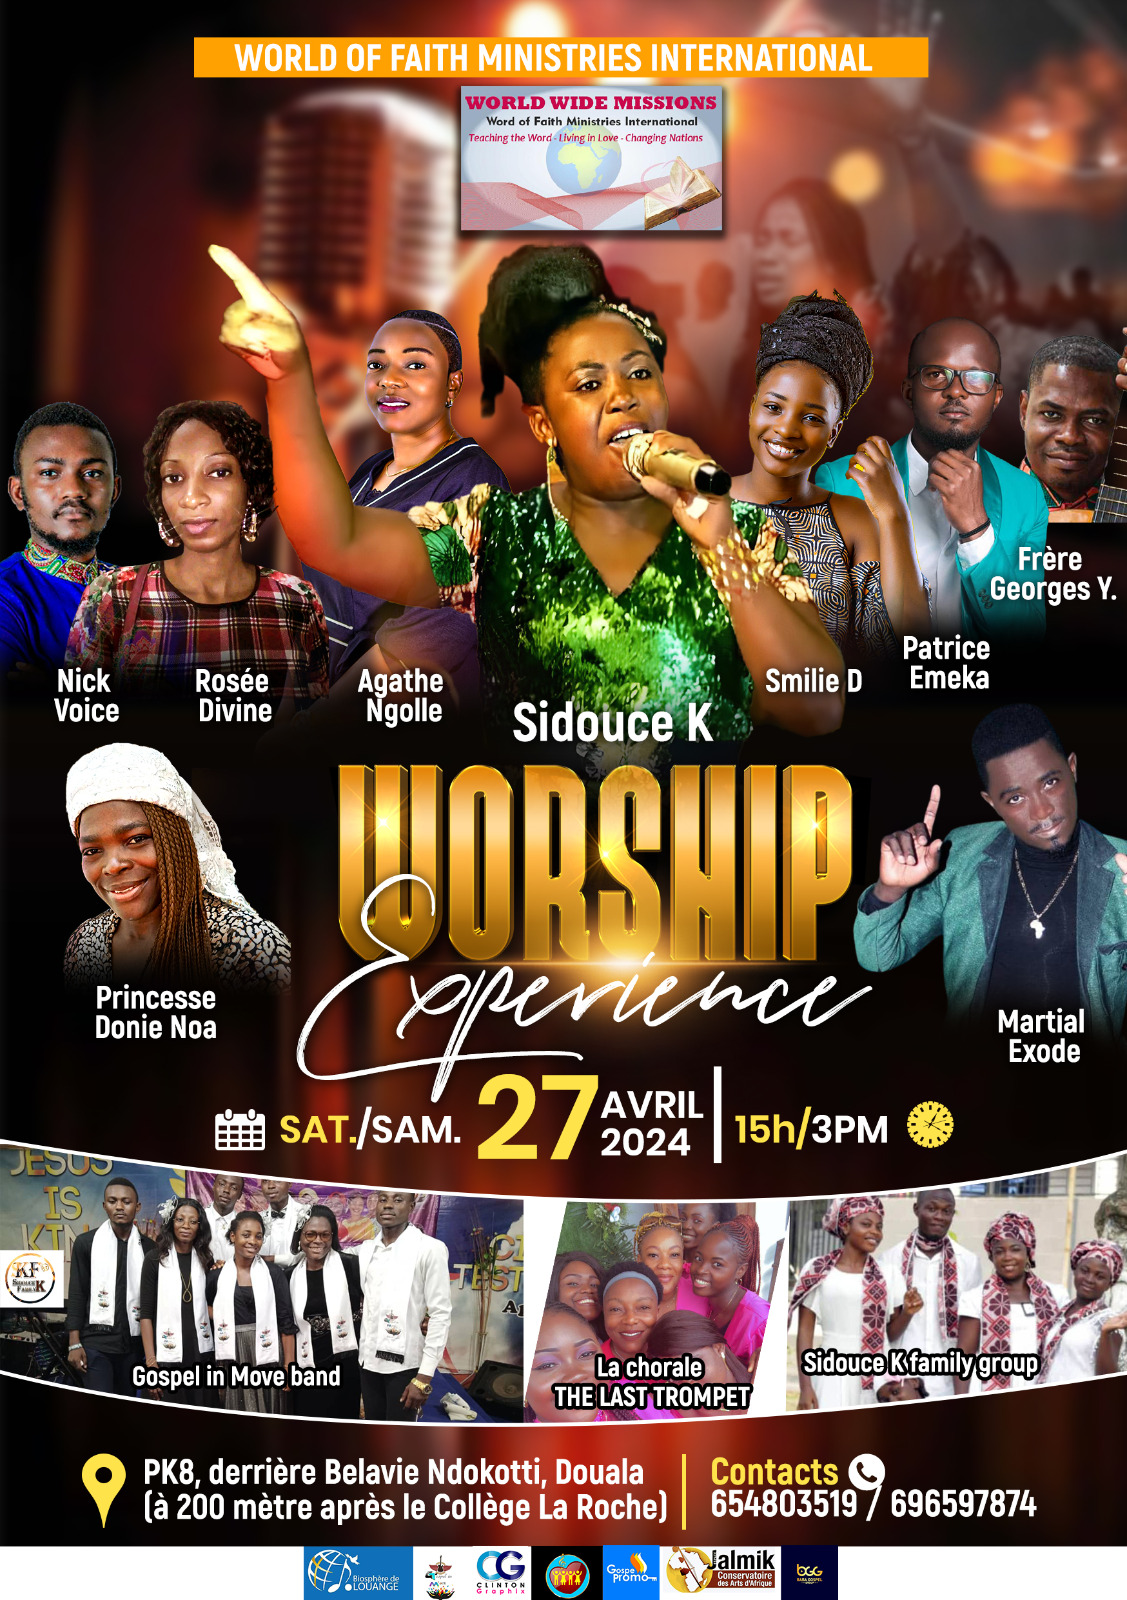 Worship experience